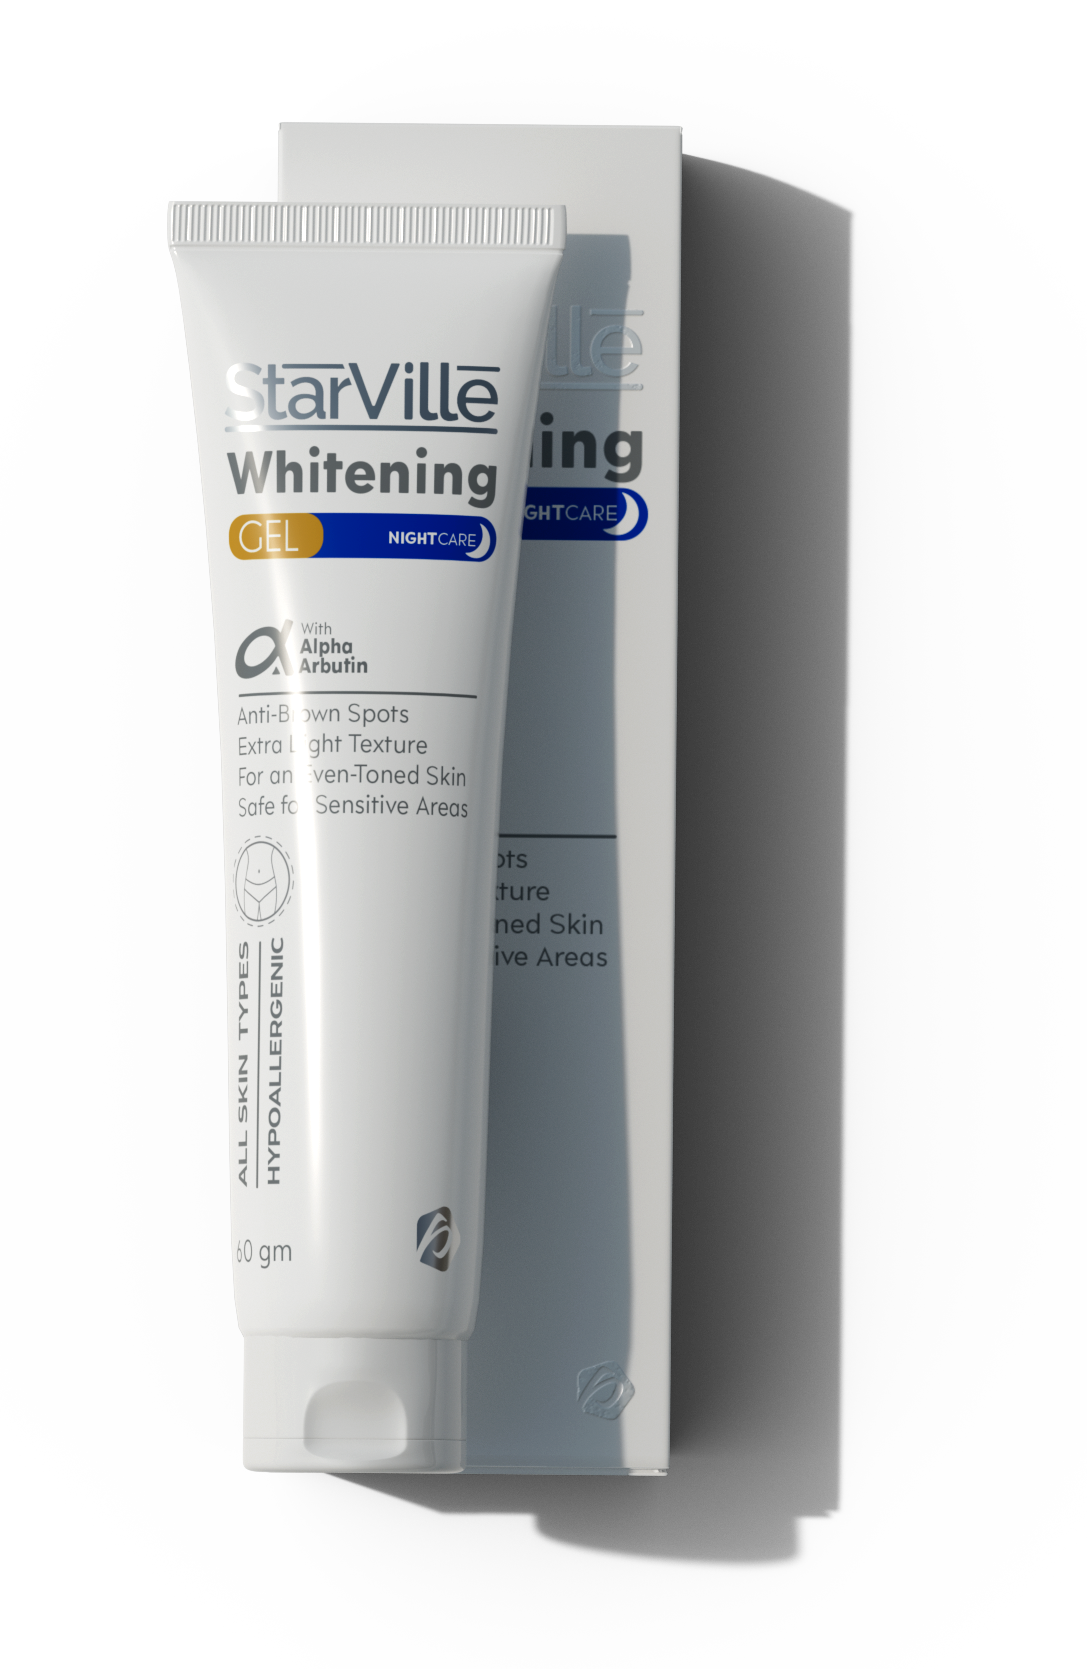 Starville Whitening Night Care Gel 60 gm